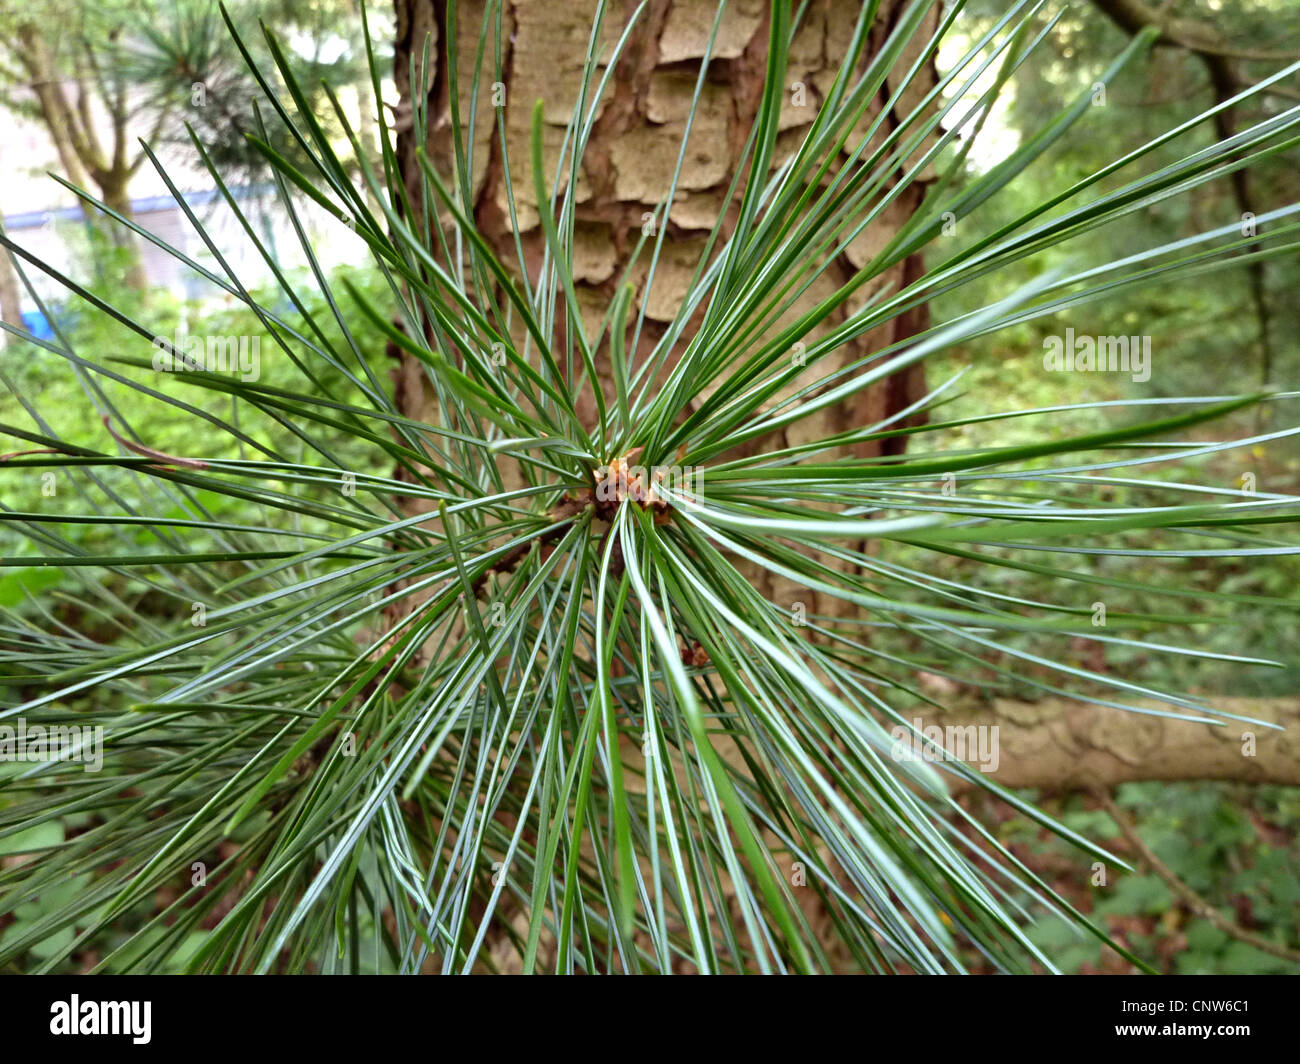 Korean pine (Pinus koraiensis), branch with needles in fornt of tree trunk Stock Photo